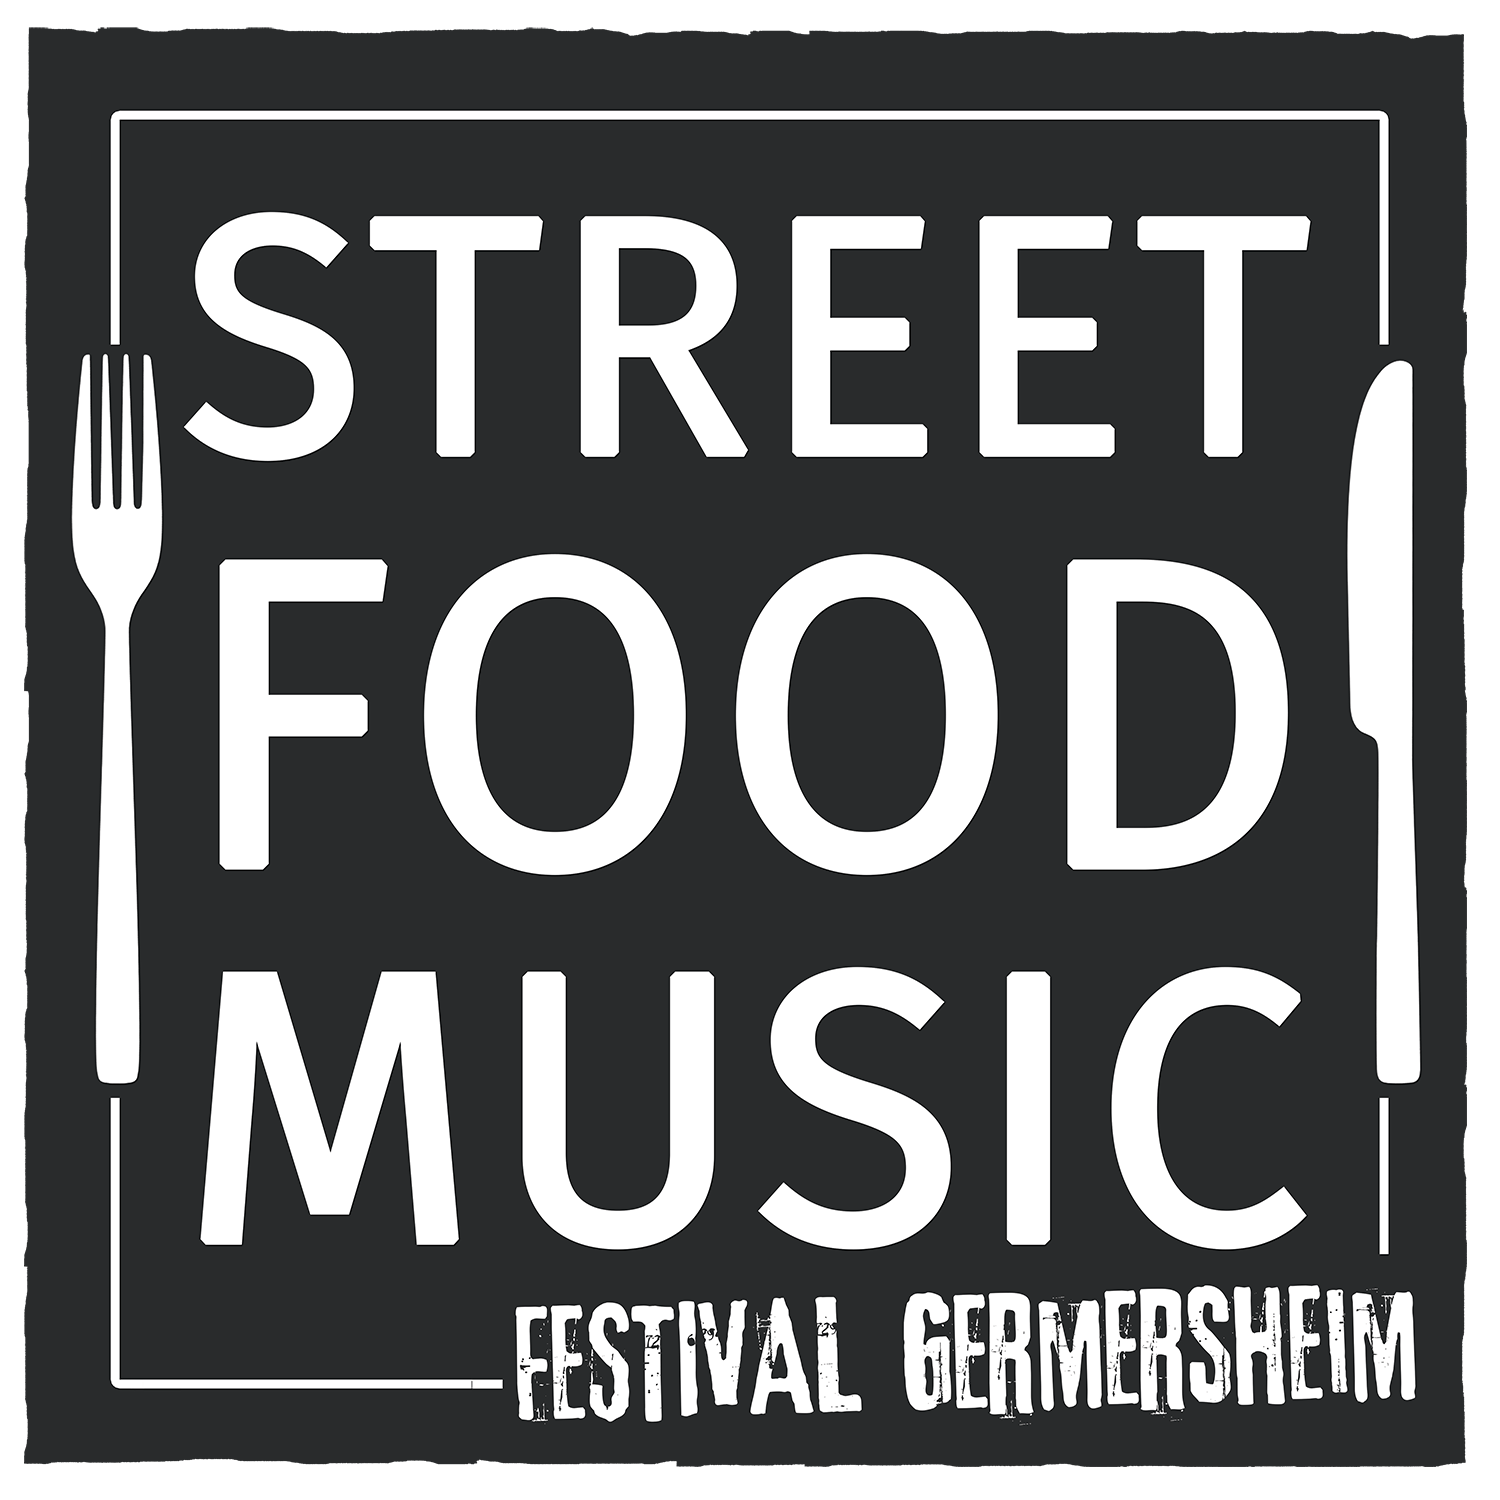 Street Food & Music Festival Germersheim